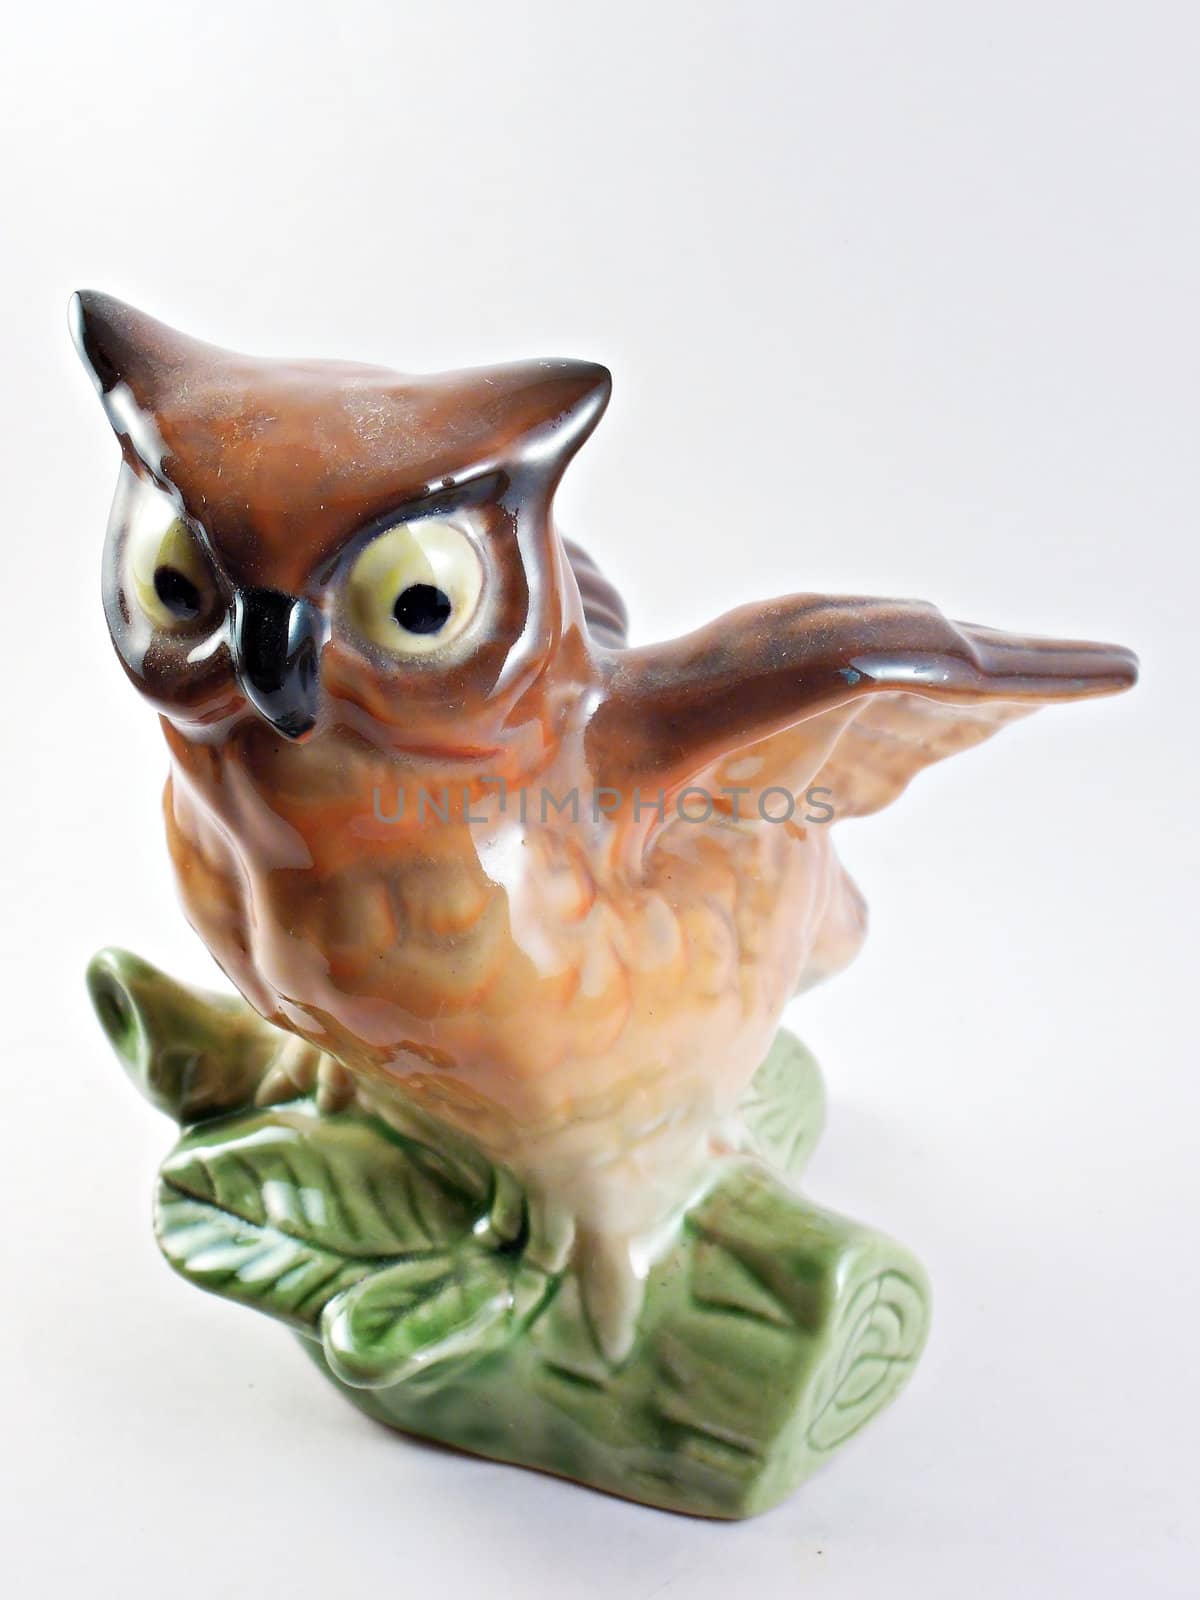 Toy owl by Picnichok